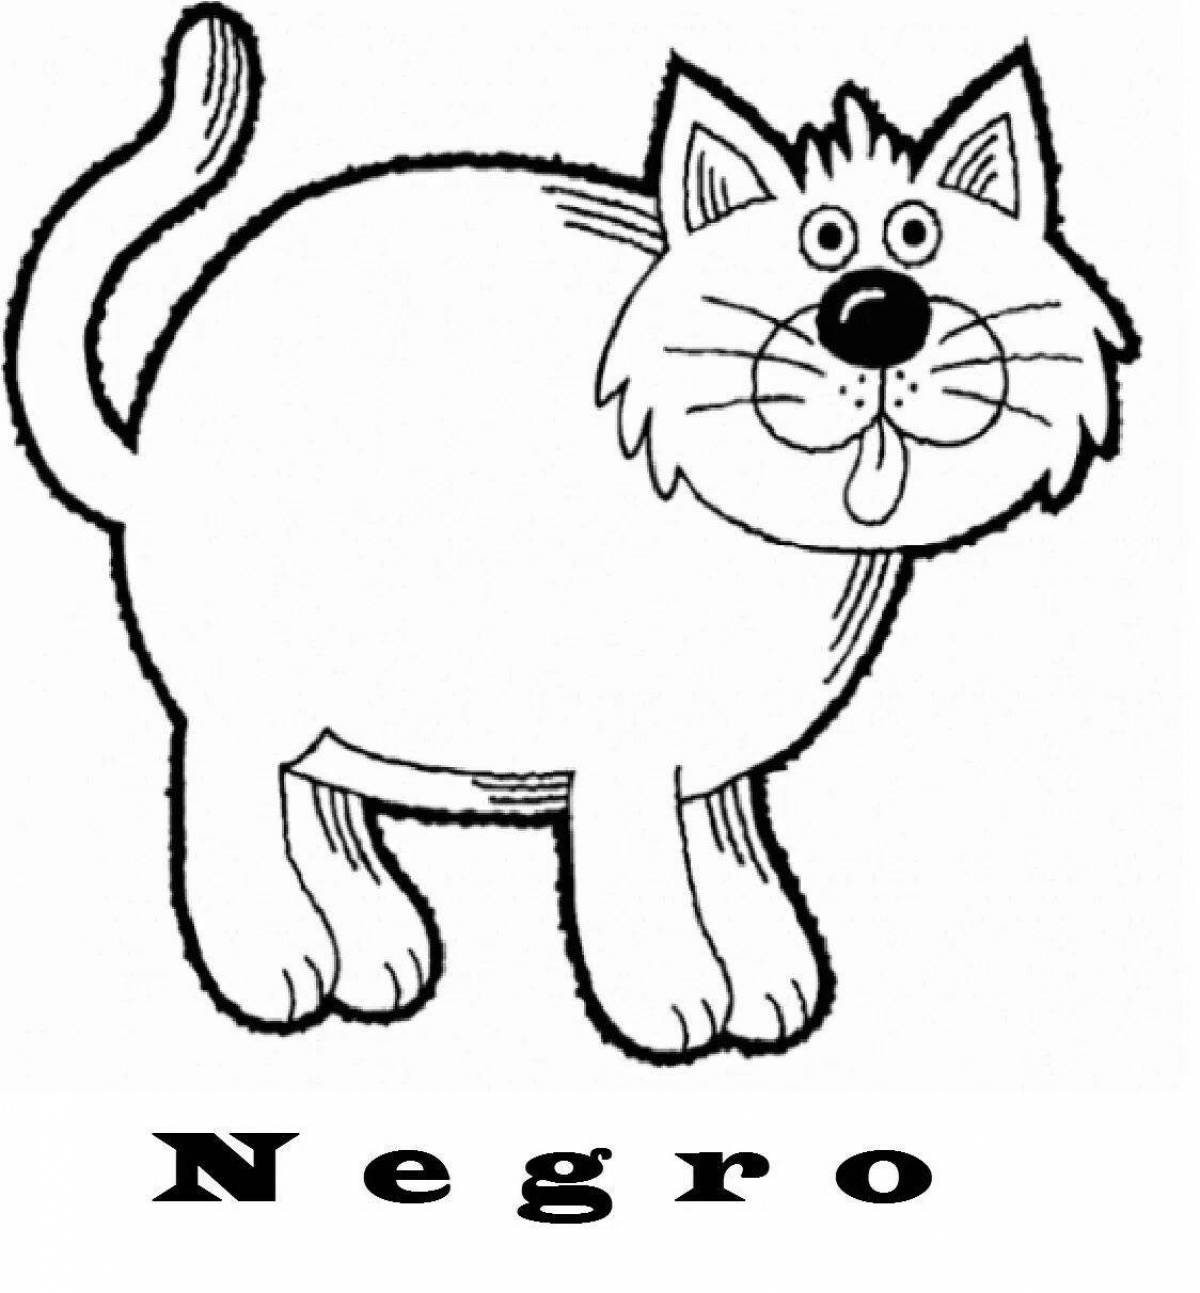 Coloring page bizarre siberian cat